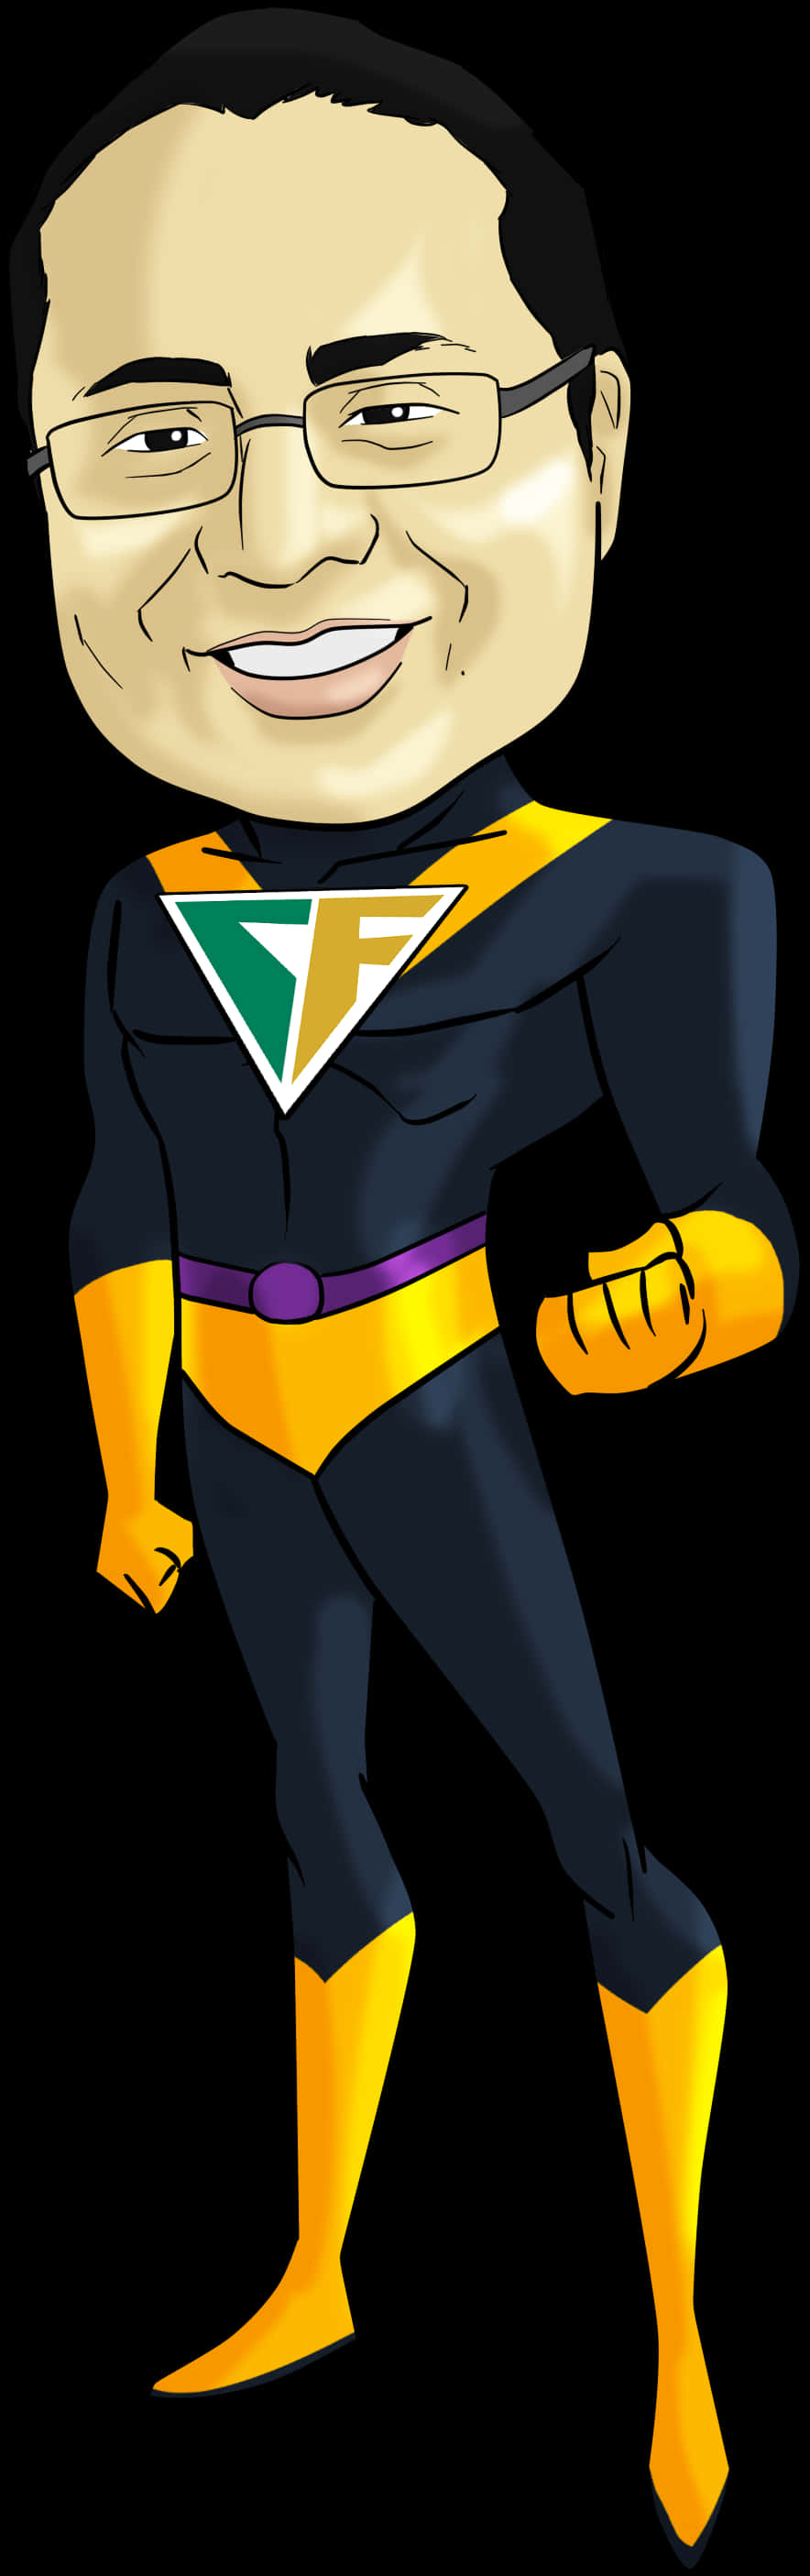 Superhero Caricature Manin Blackand Yellow Costume PNG image